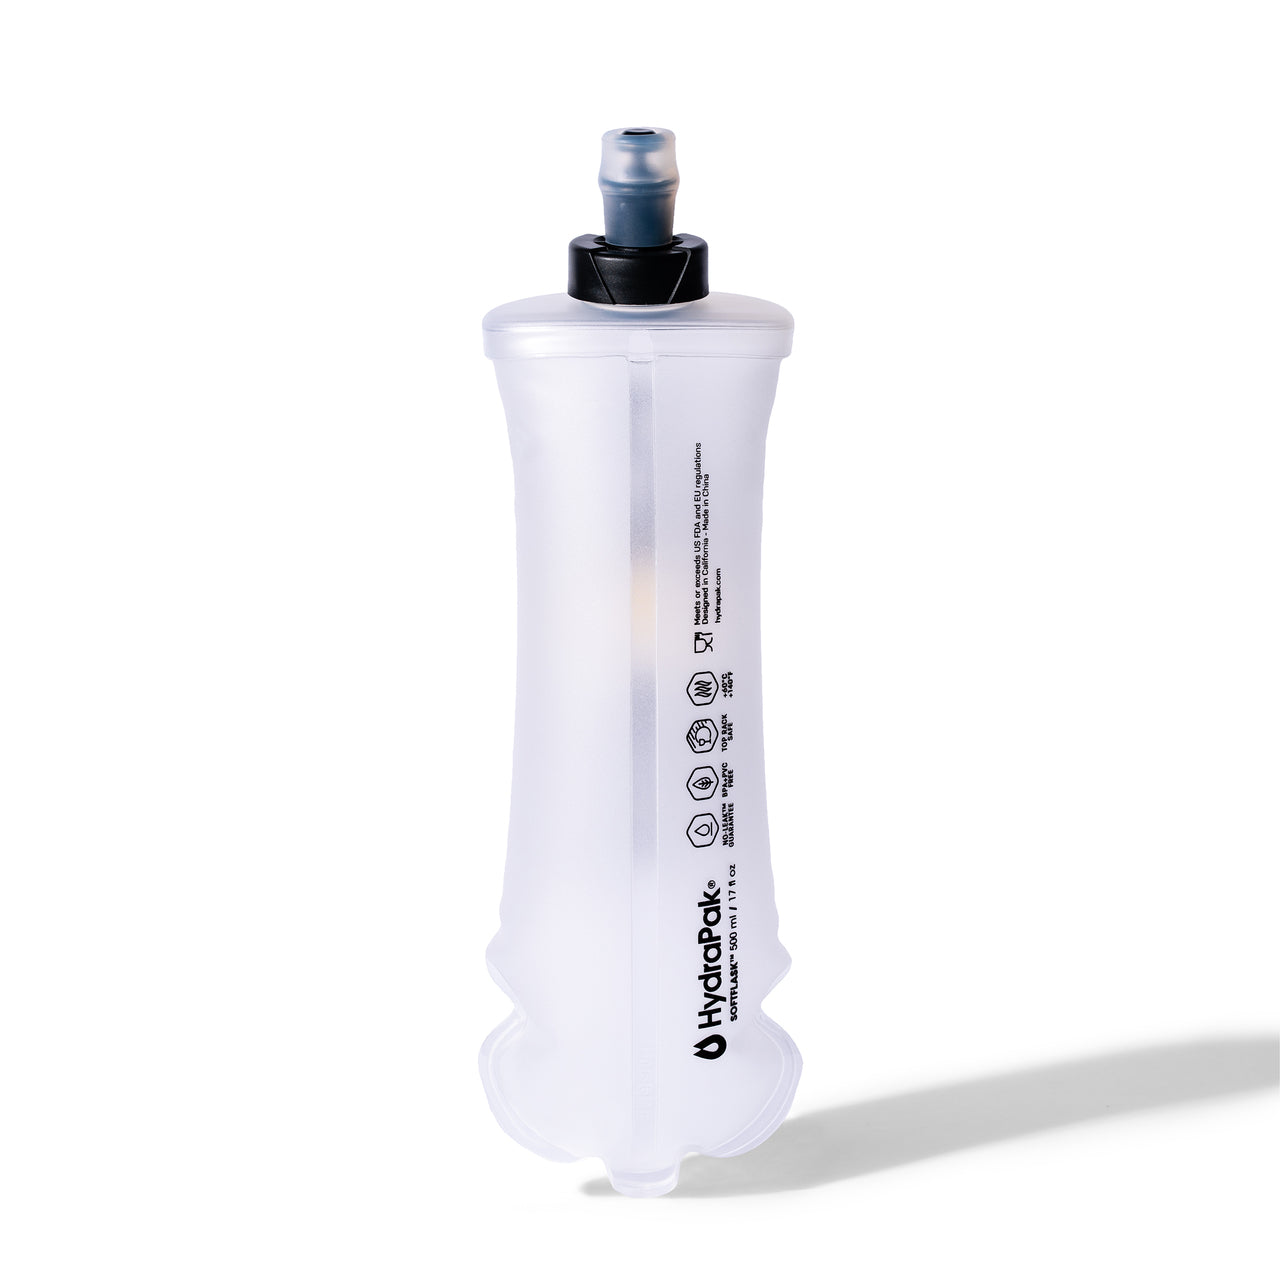 Naked - Running Flask - 500ml (Hydrapak)